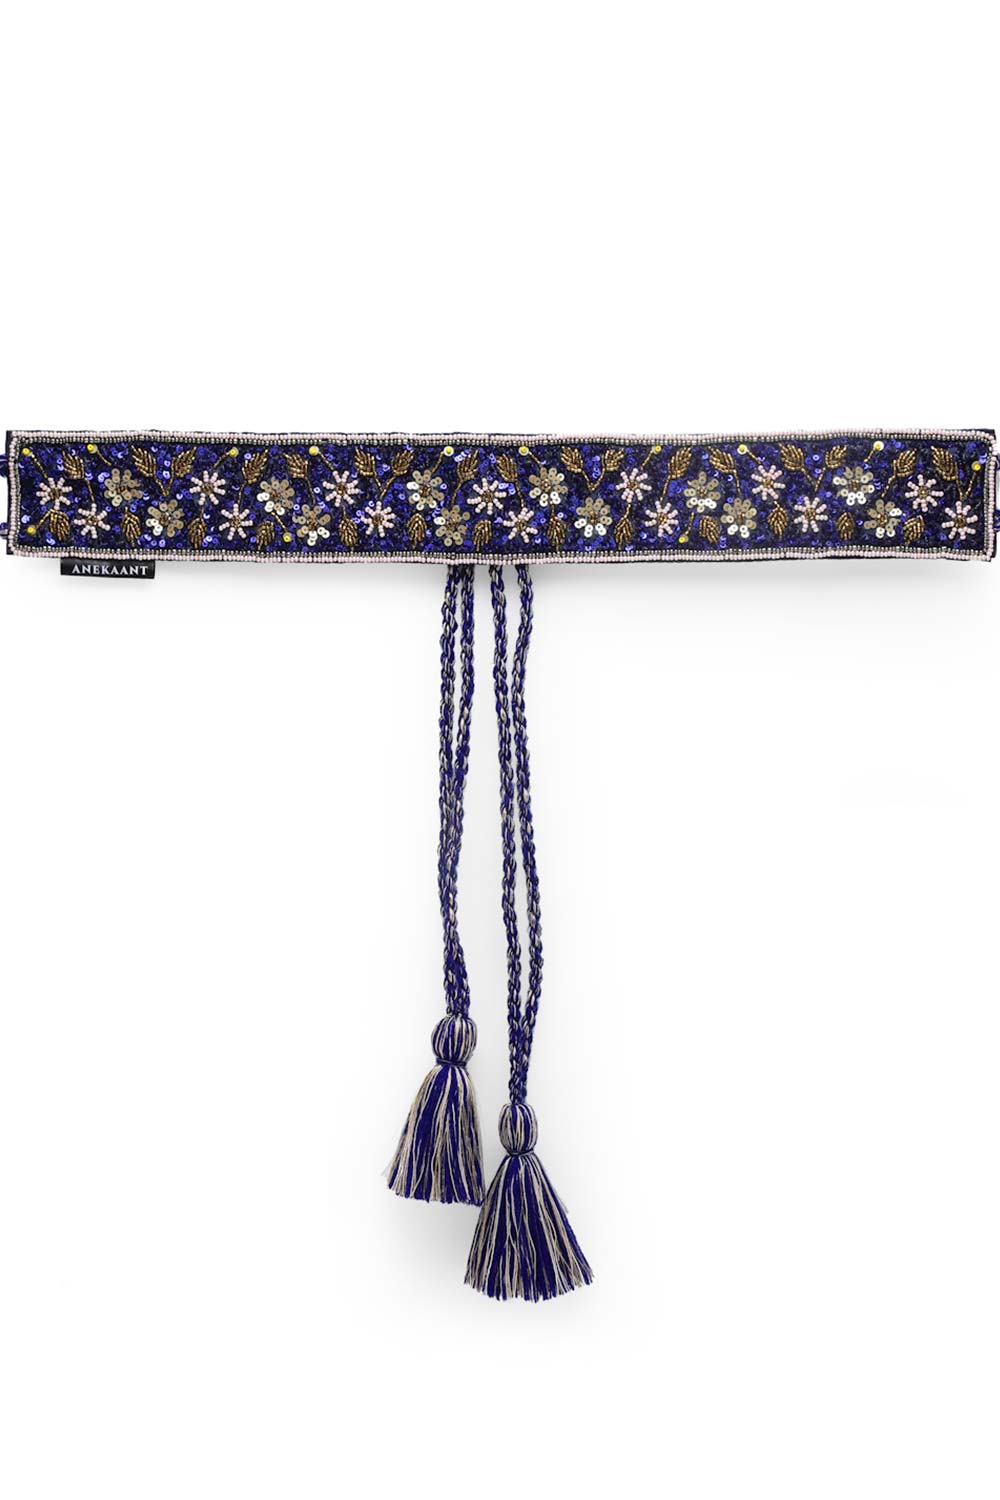 Buy Floral Sequins Work Saree Belt in Royal Blue & Multi Online - One Minute Saree